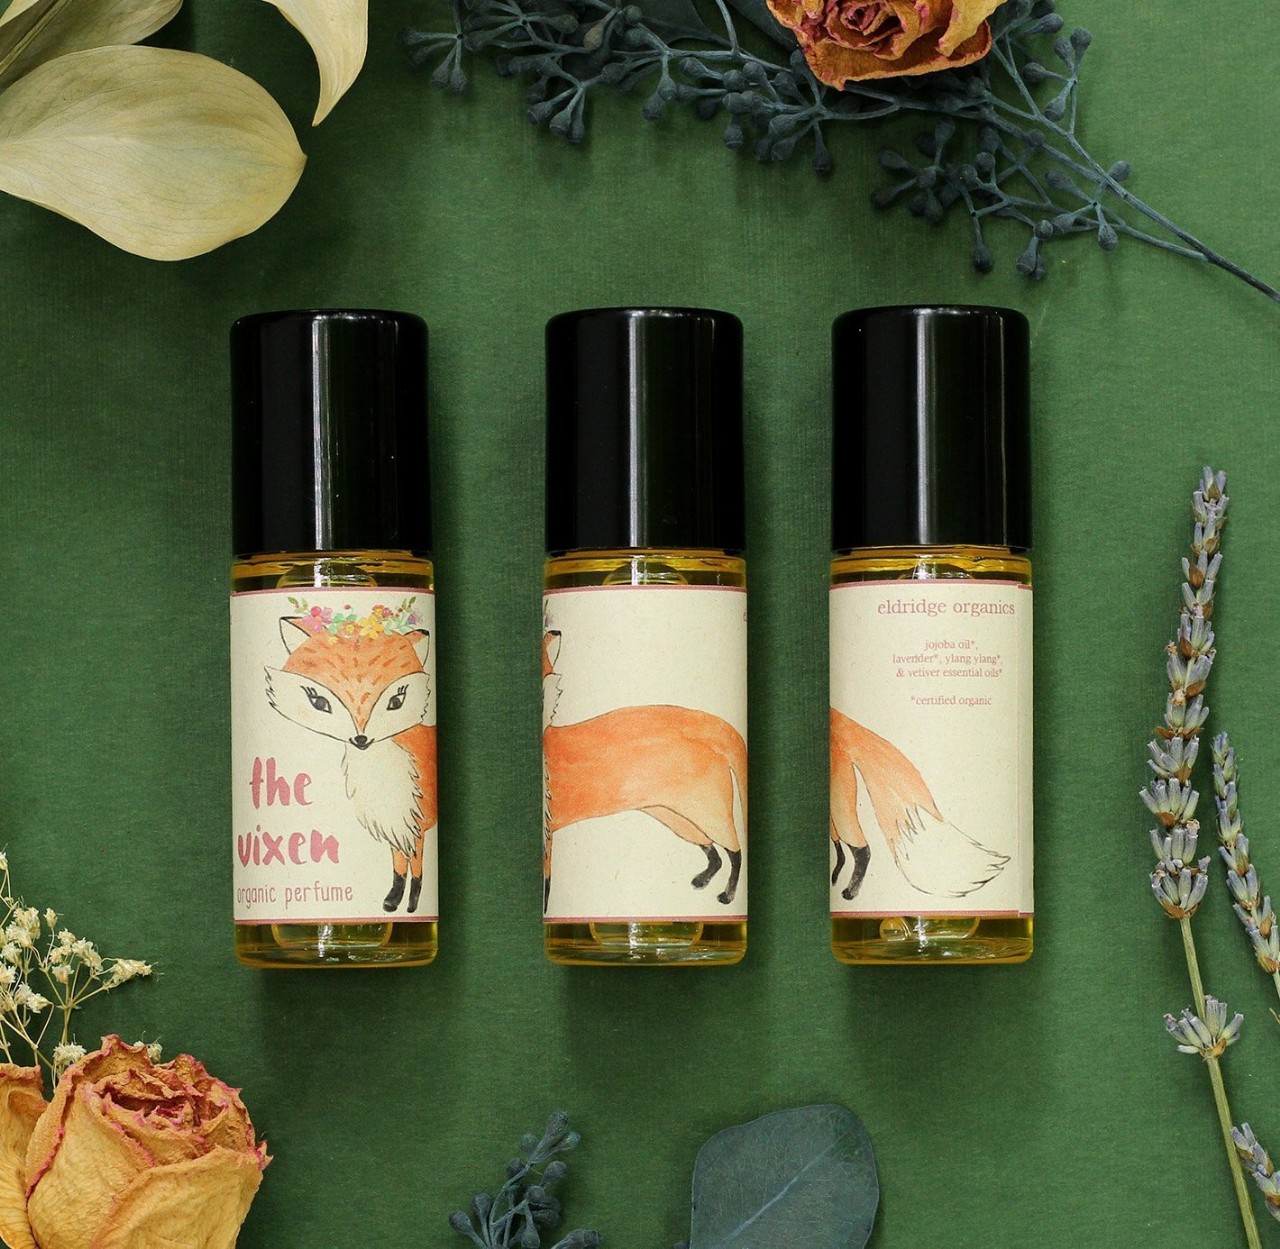 The Vixen Organic Perfume Oil Flirty, elusive, captivating, and mischievous